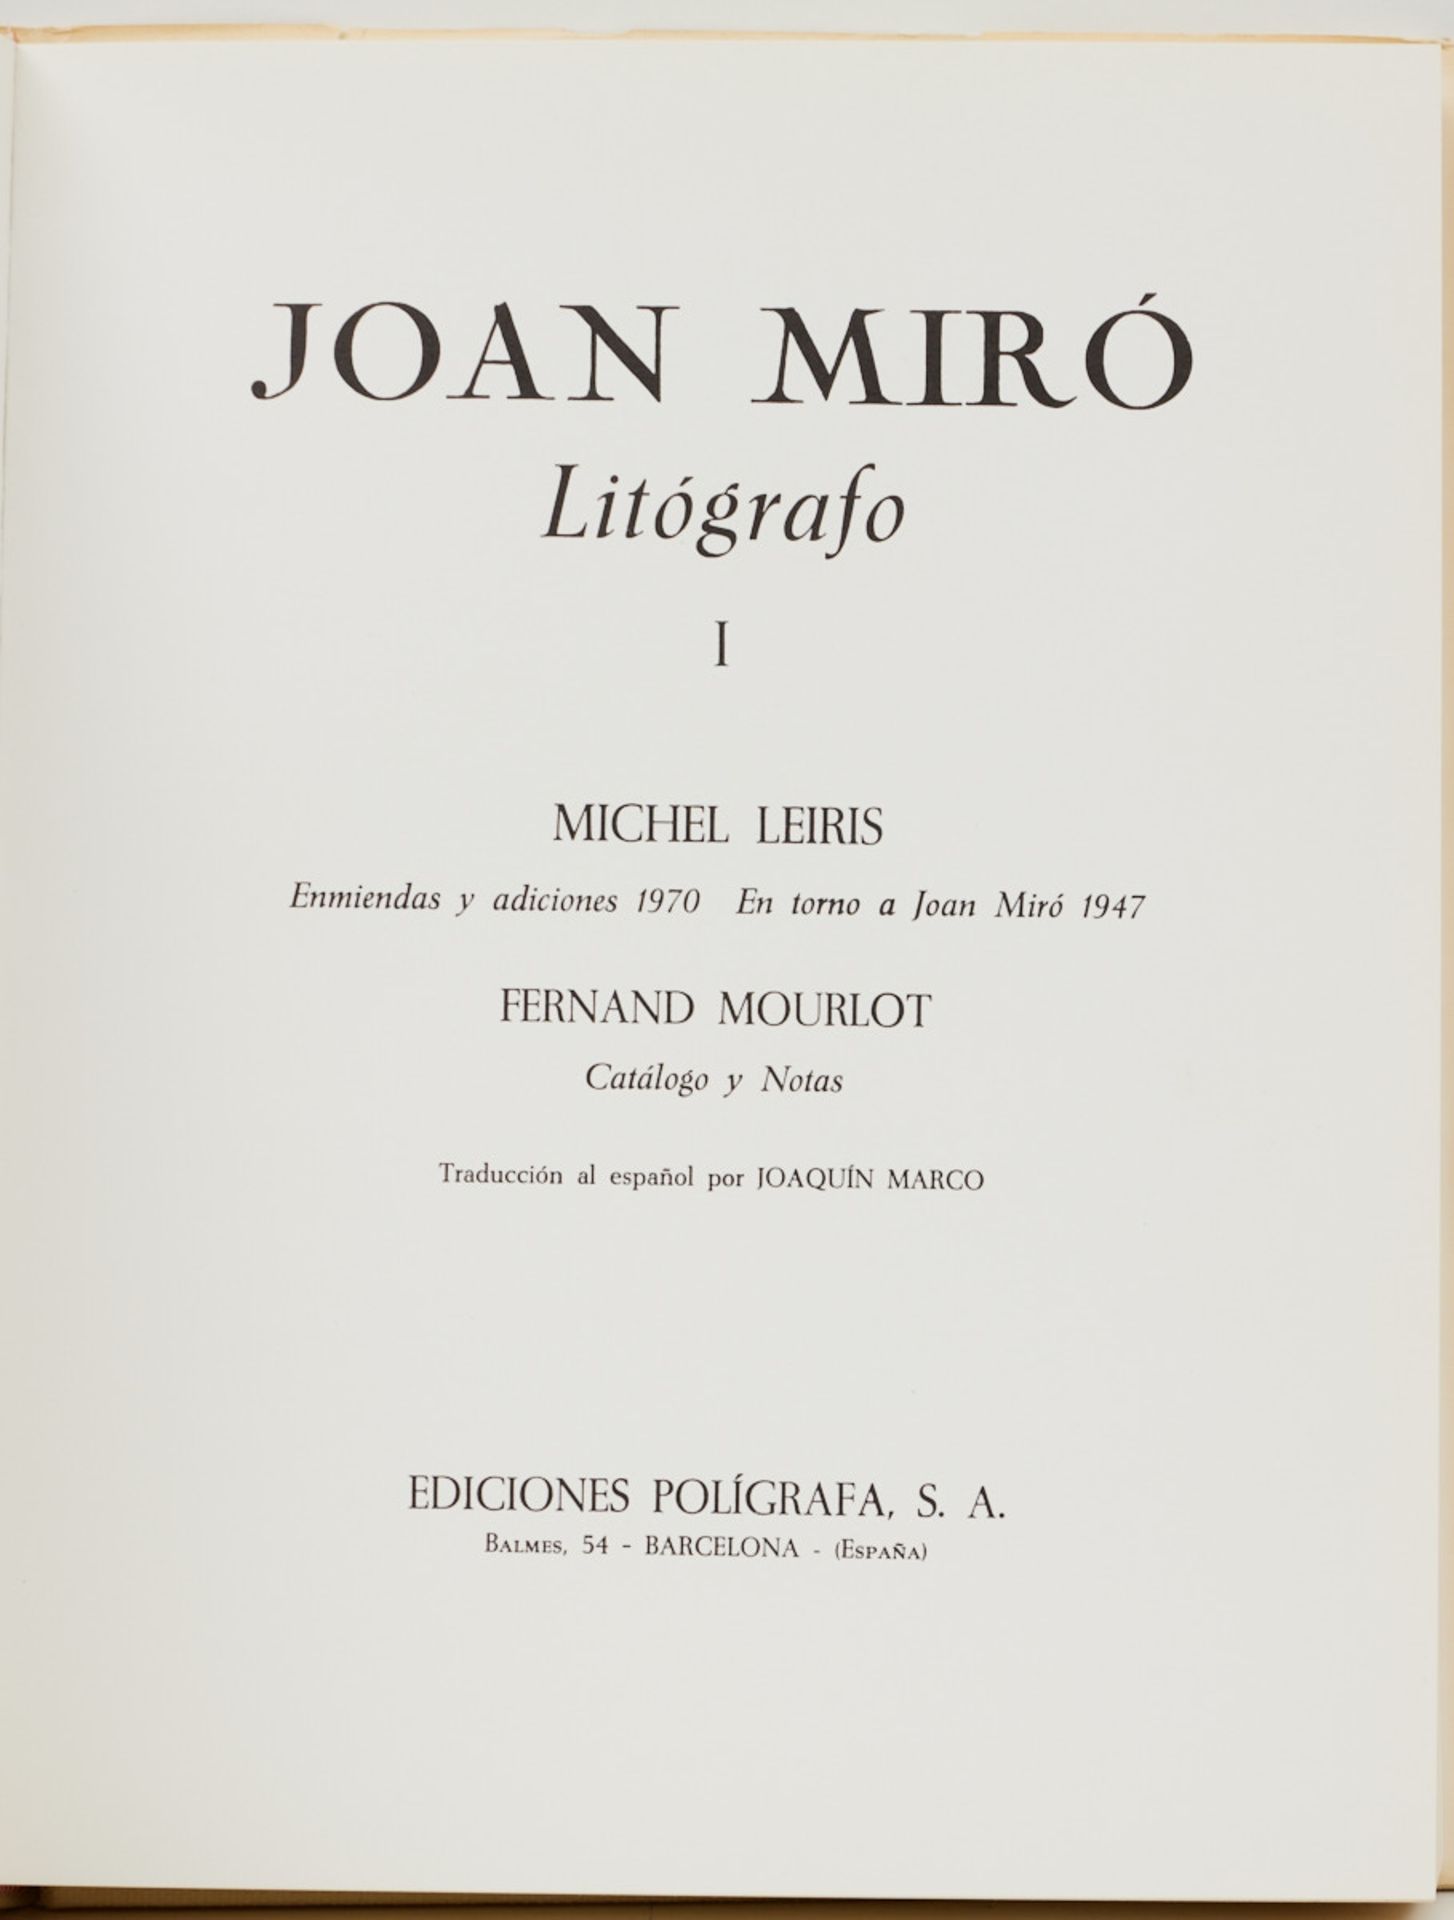 Joan Miró, Litógrafo, 1972 - Image 2 of 5